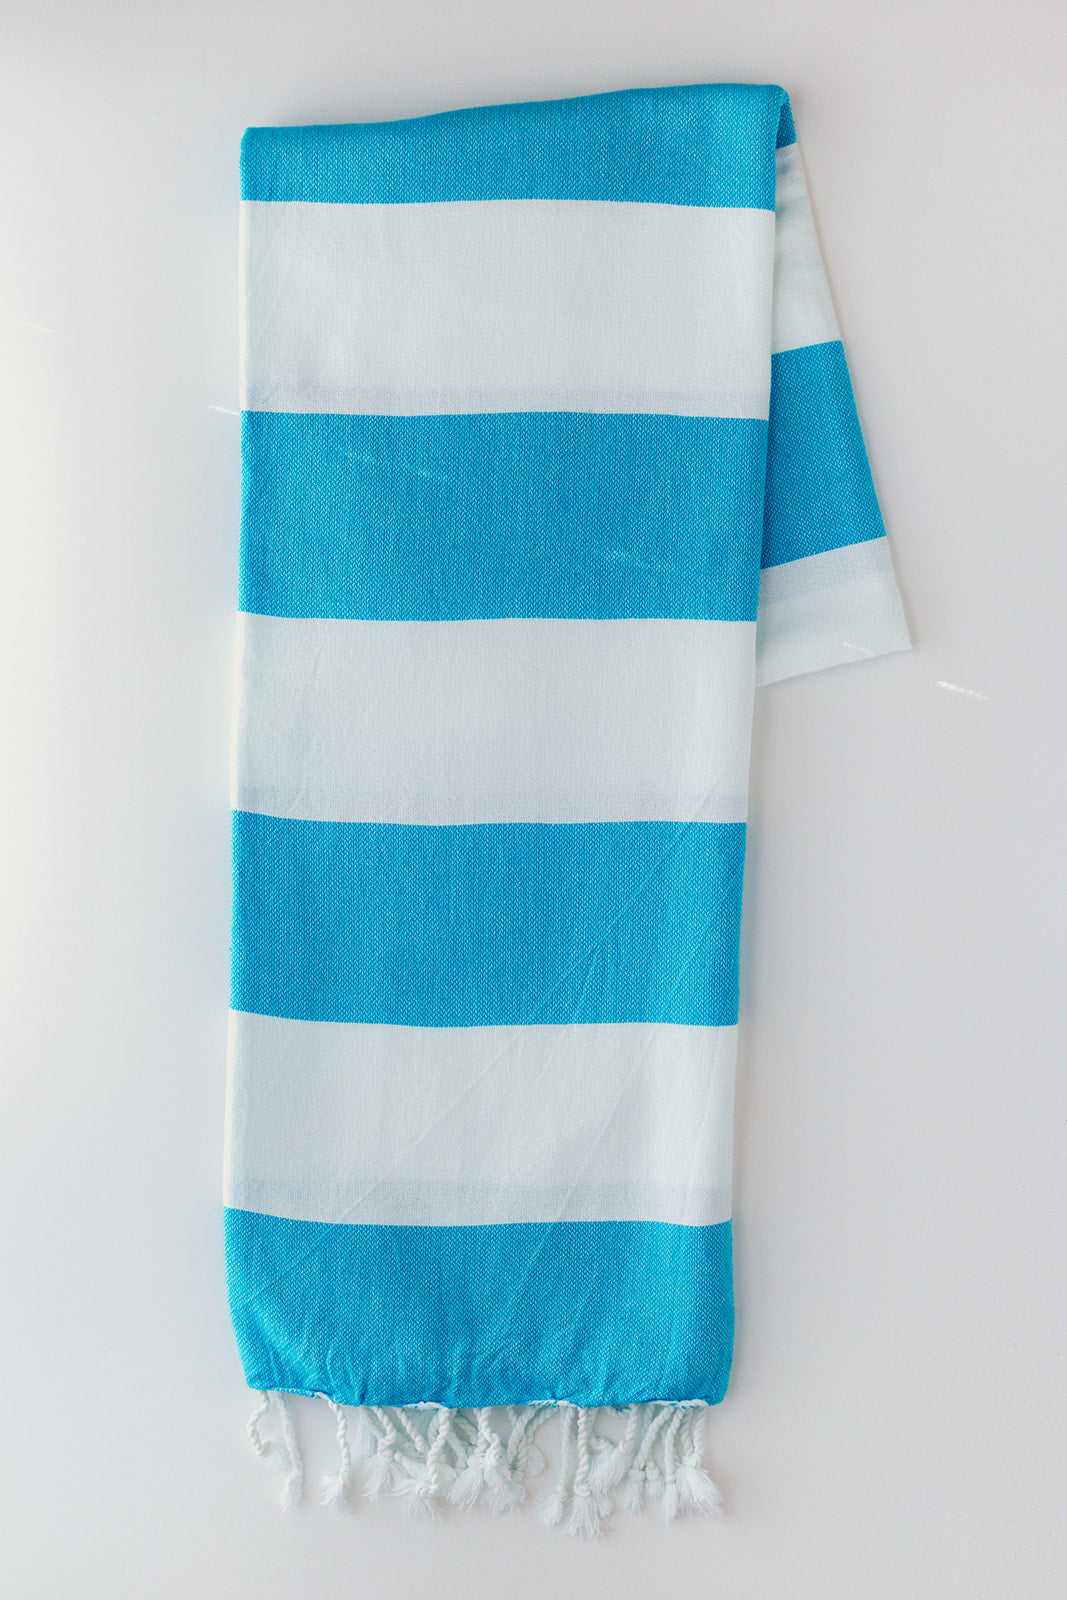 Turquoise Stripes Turkish Towel